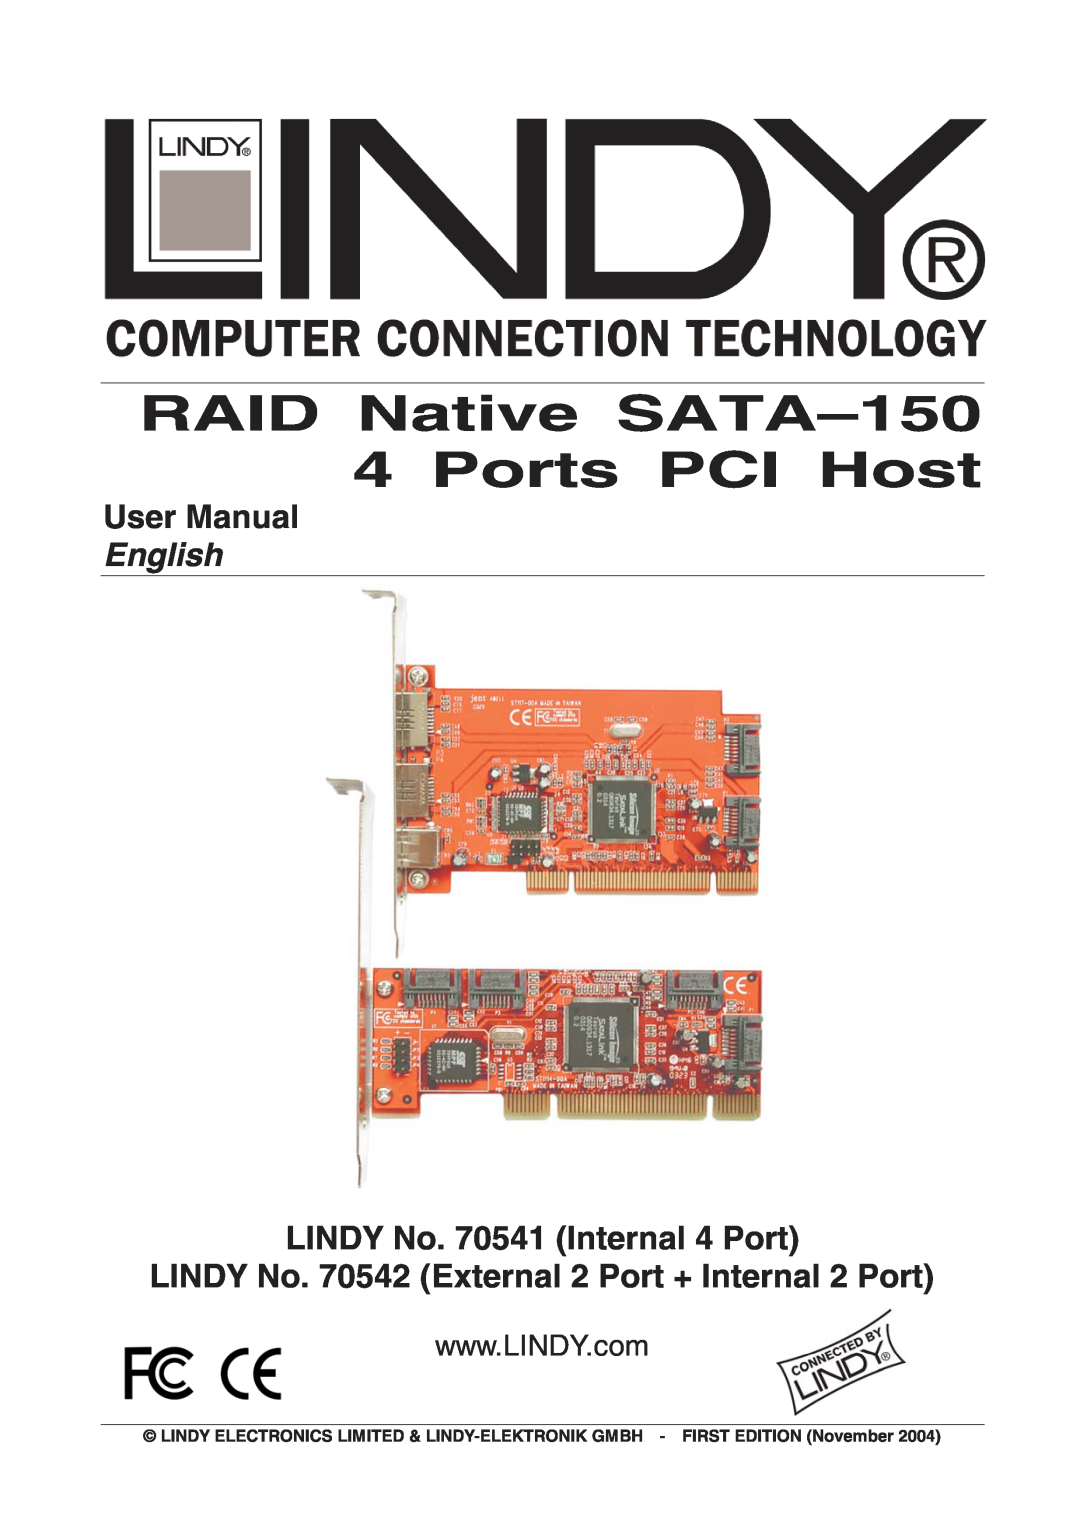 Lindy user manual LINDY No. 70541 Internal 4 Port, LINDY No. 70542 External 2 Port + Internal 2 Port, English 